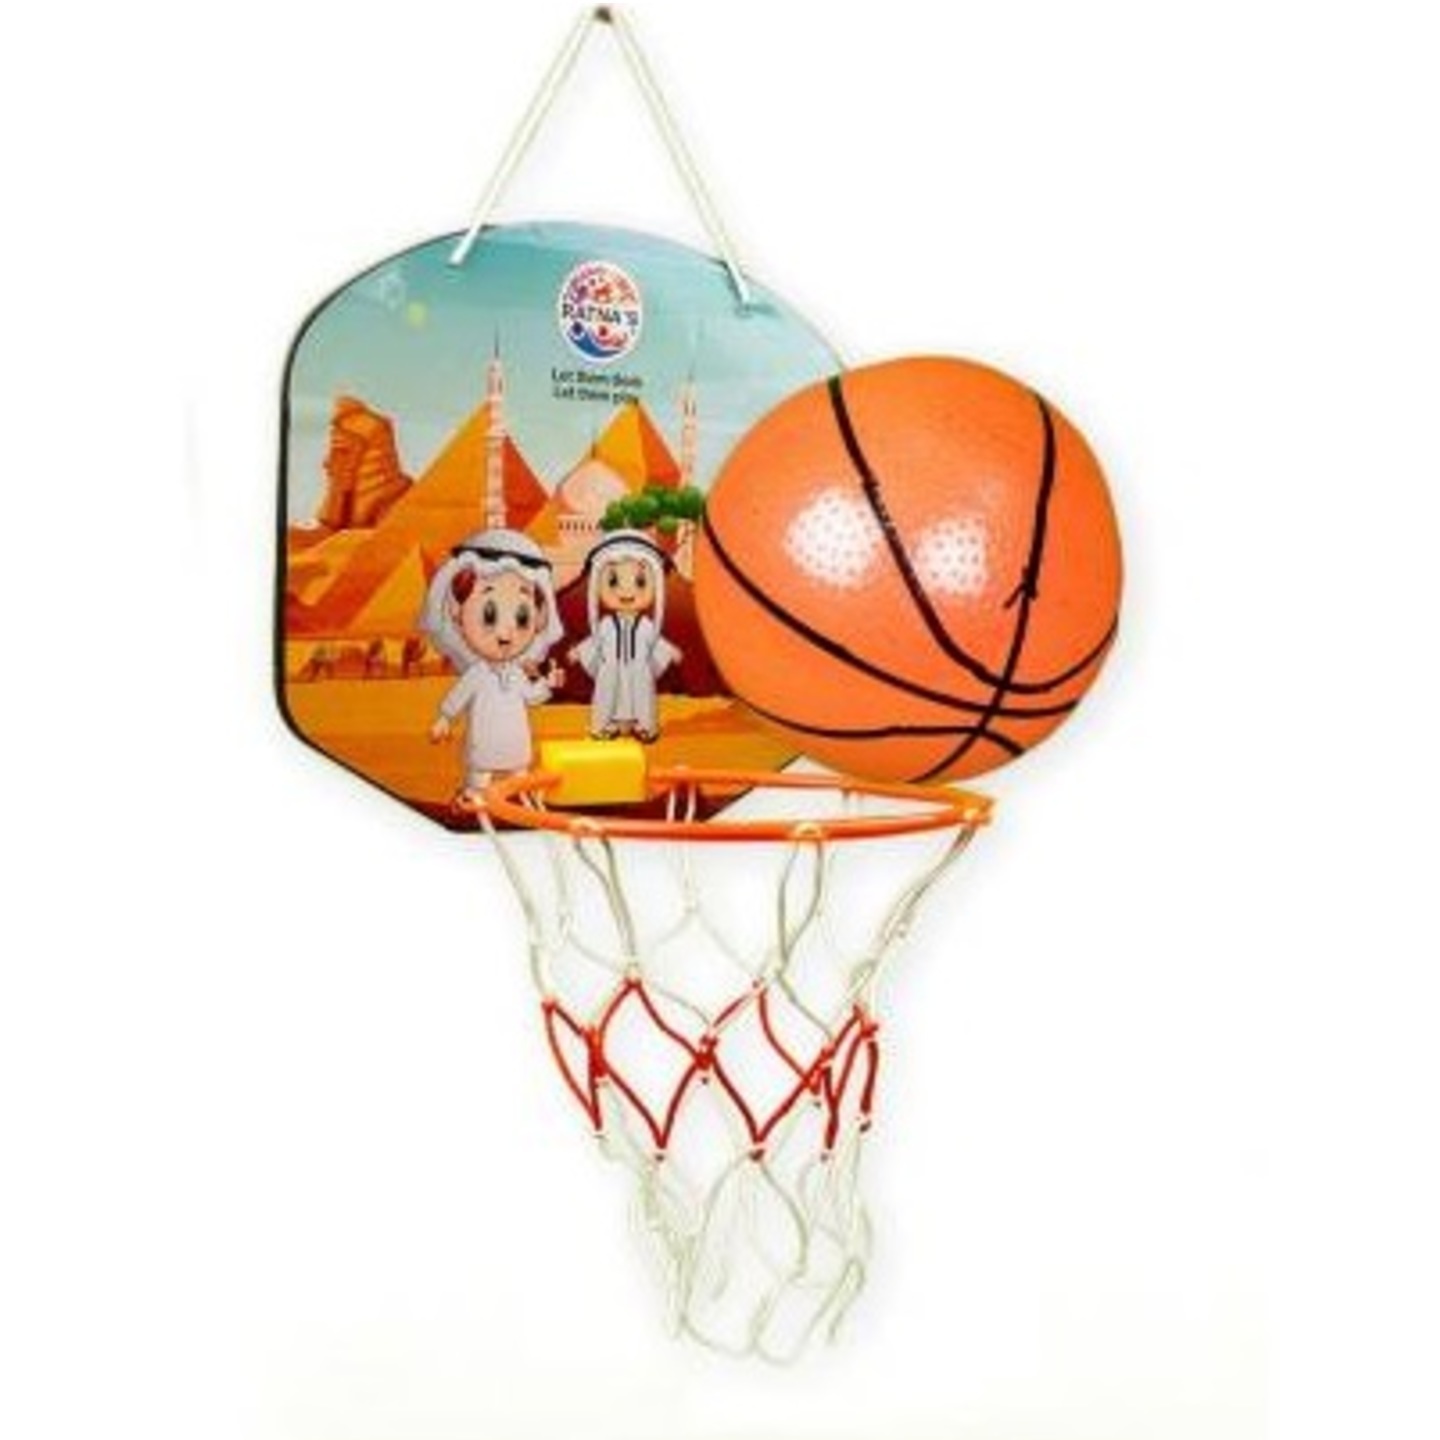 Ratna's Cartoon indoor Basketball set for kids